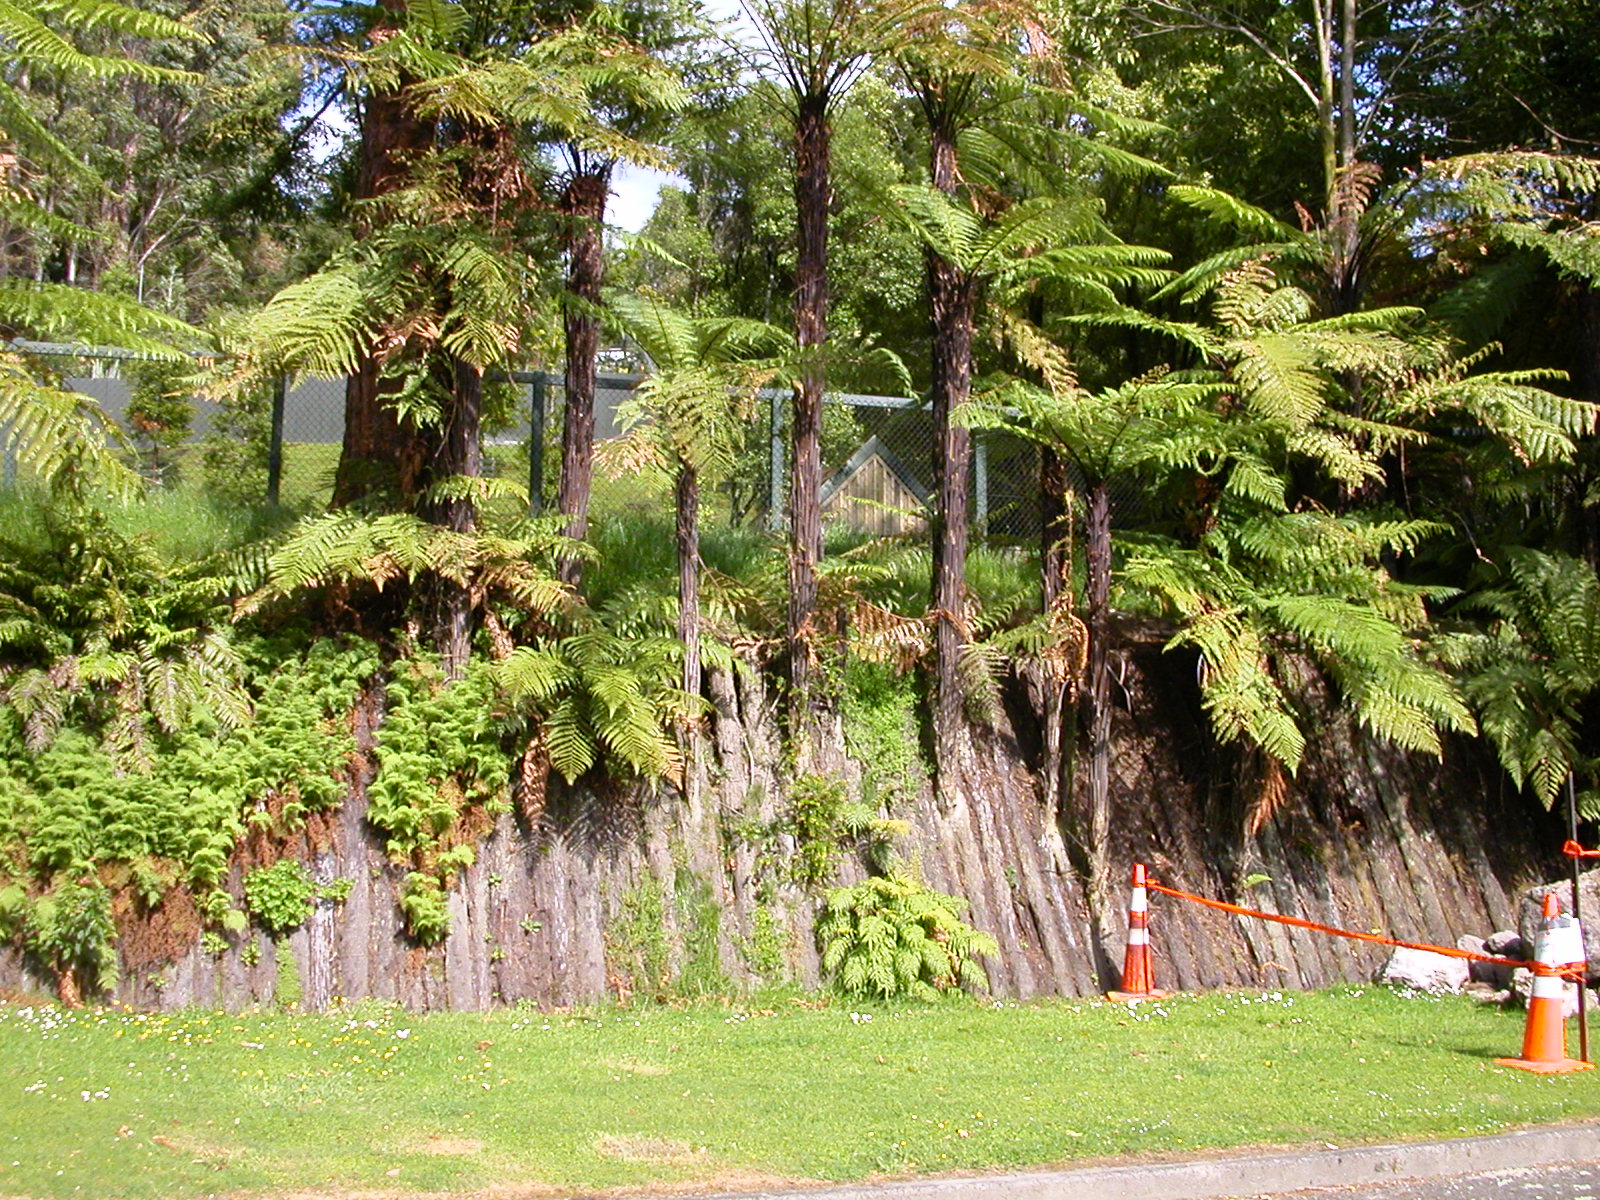 New Zealand, tree ferns